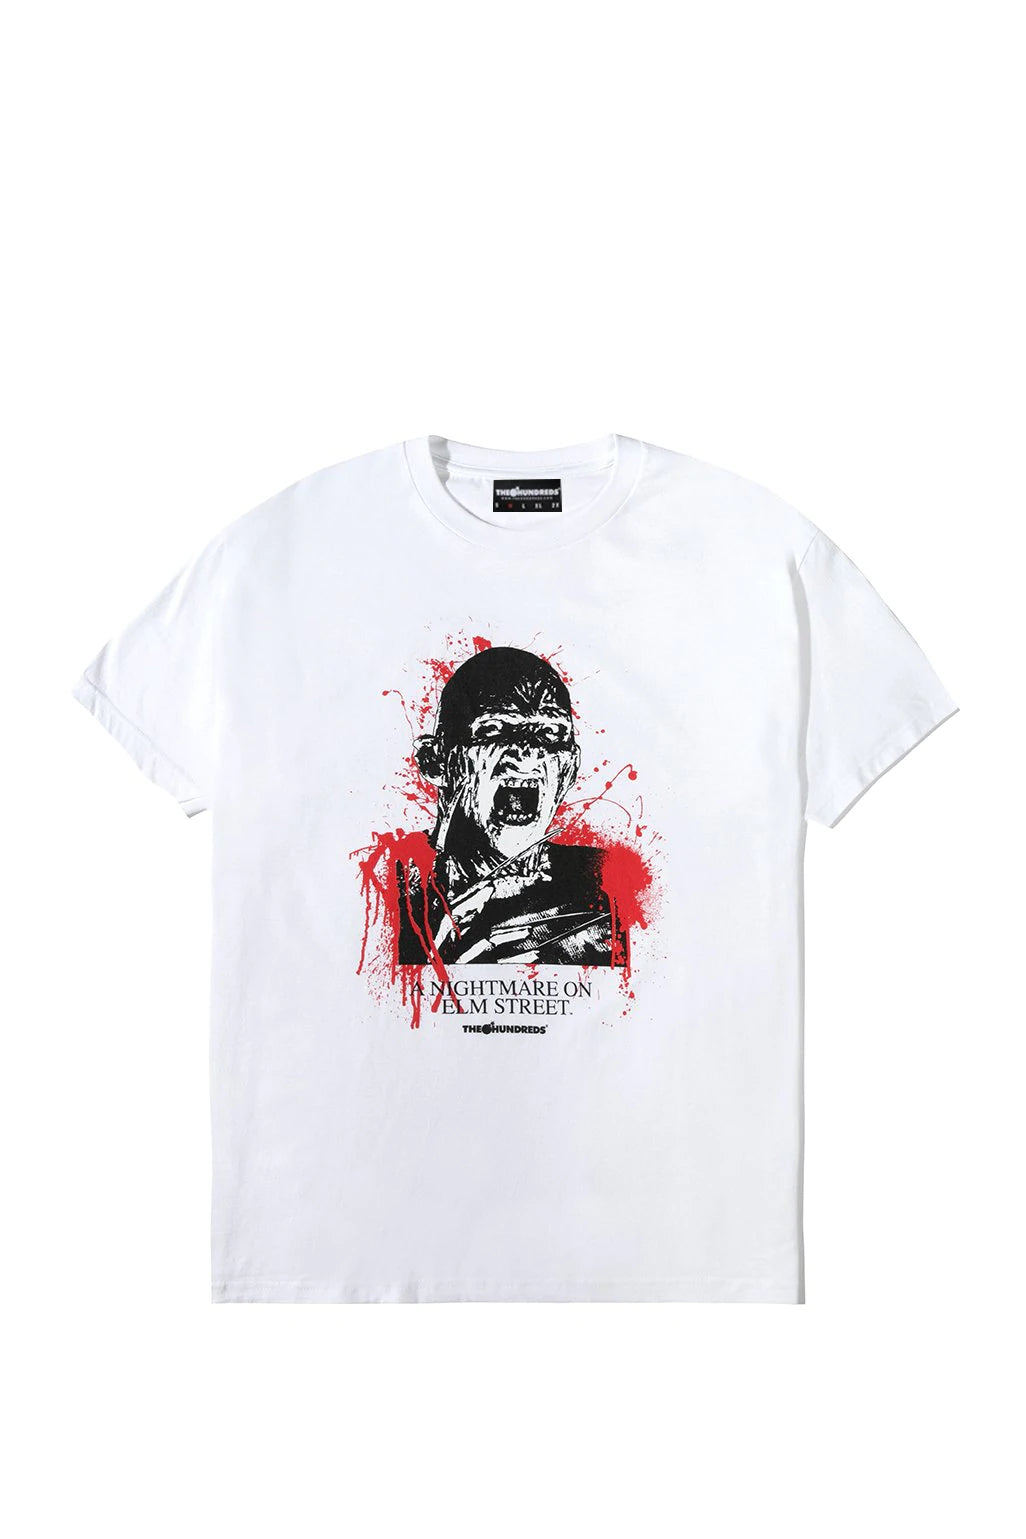 The Hundreds x Nightmare on Elm Street T Shirt - White